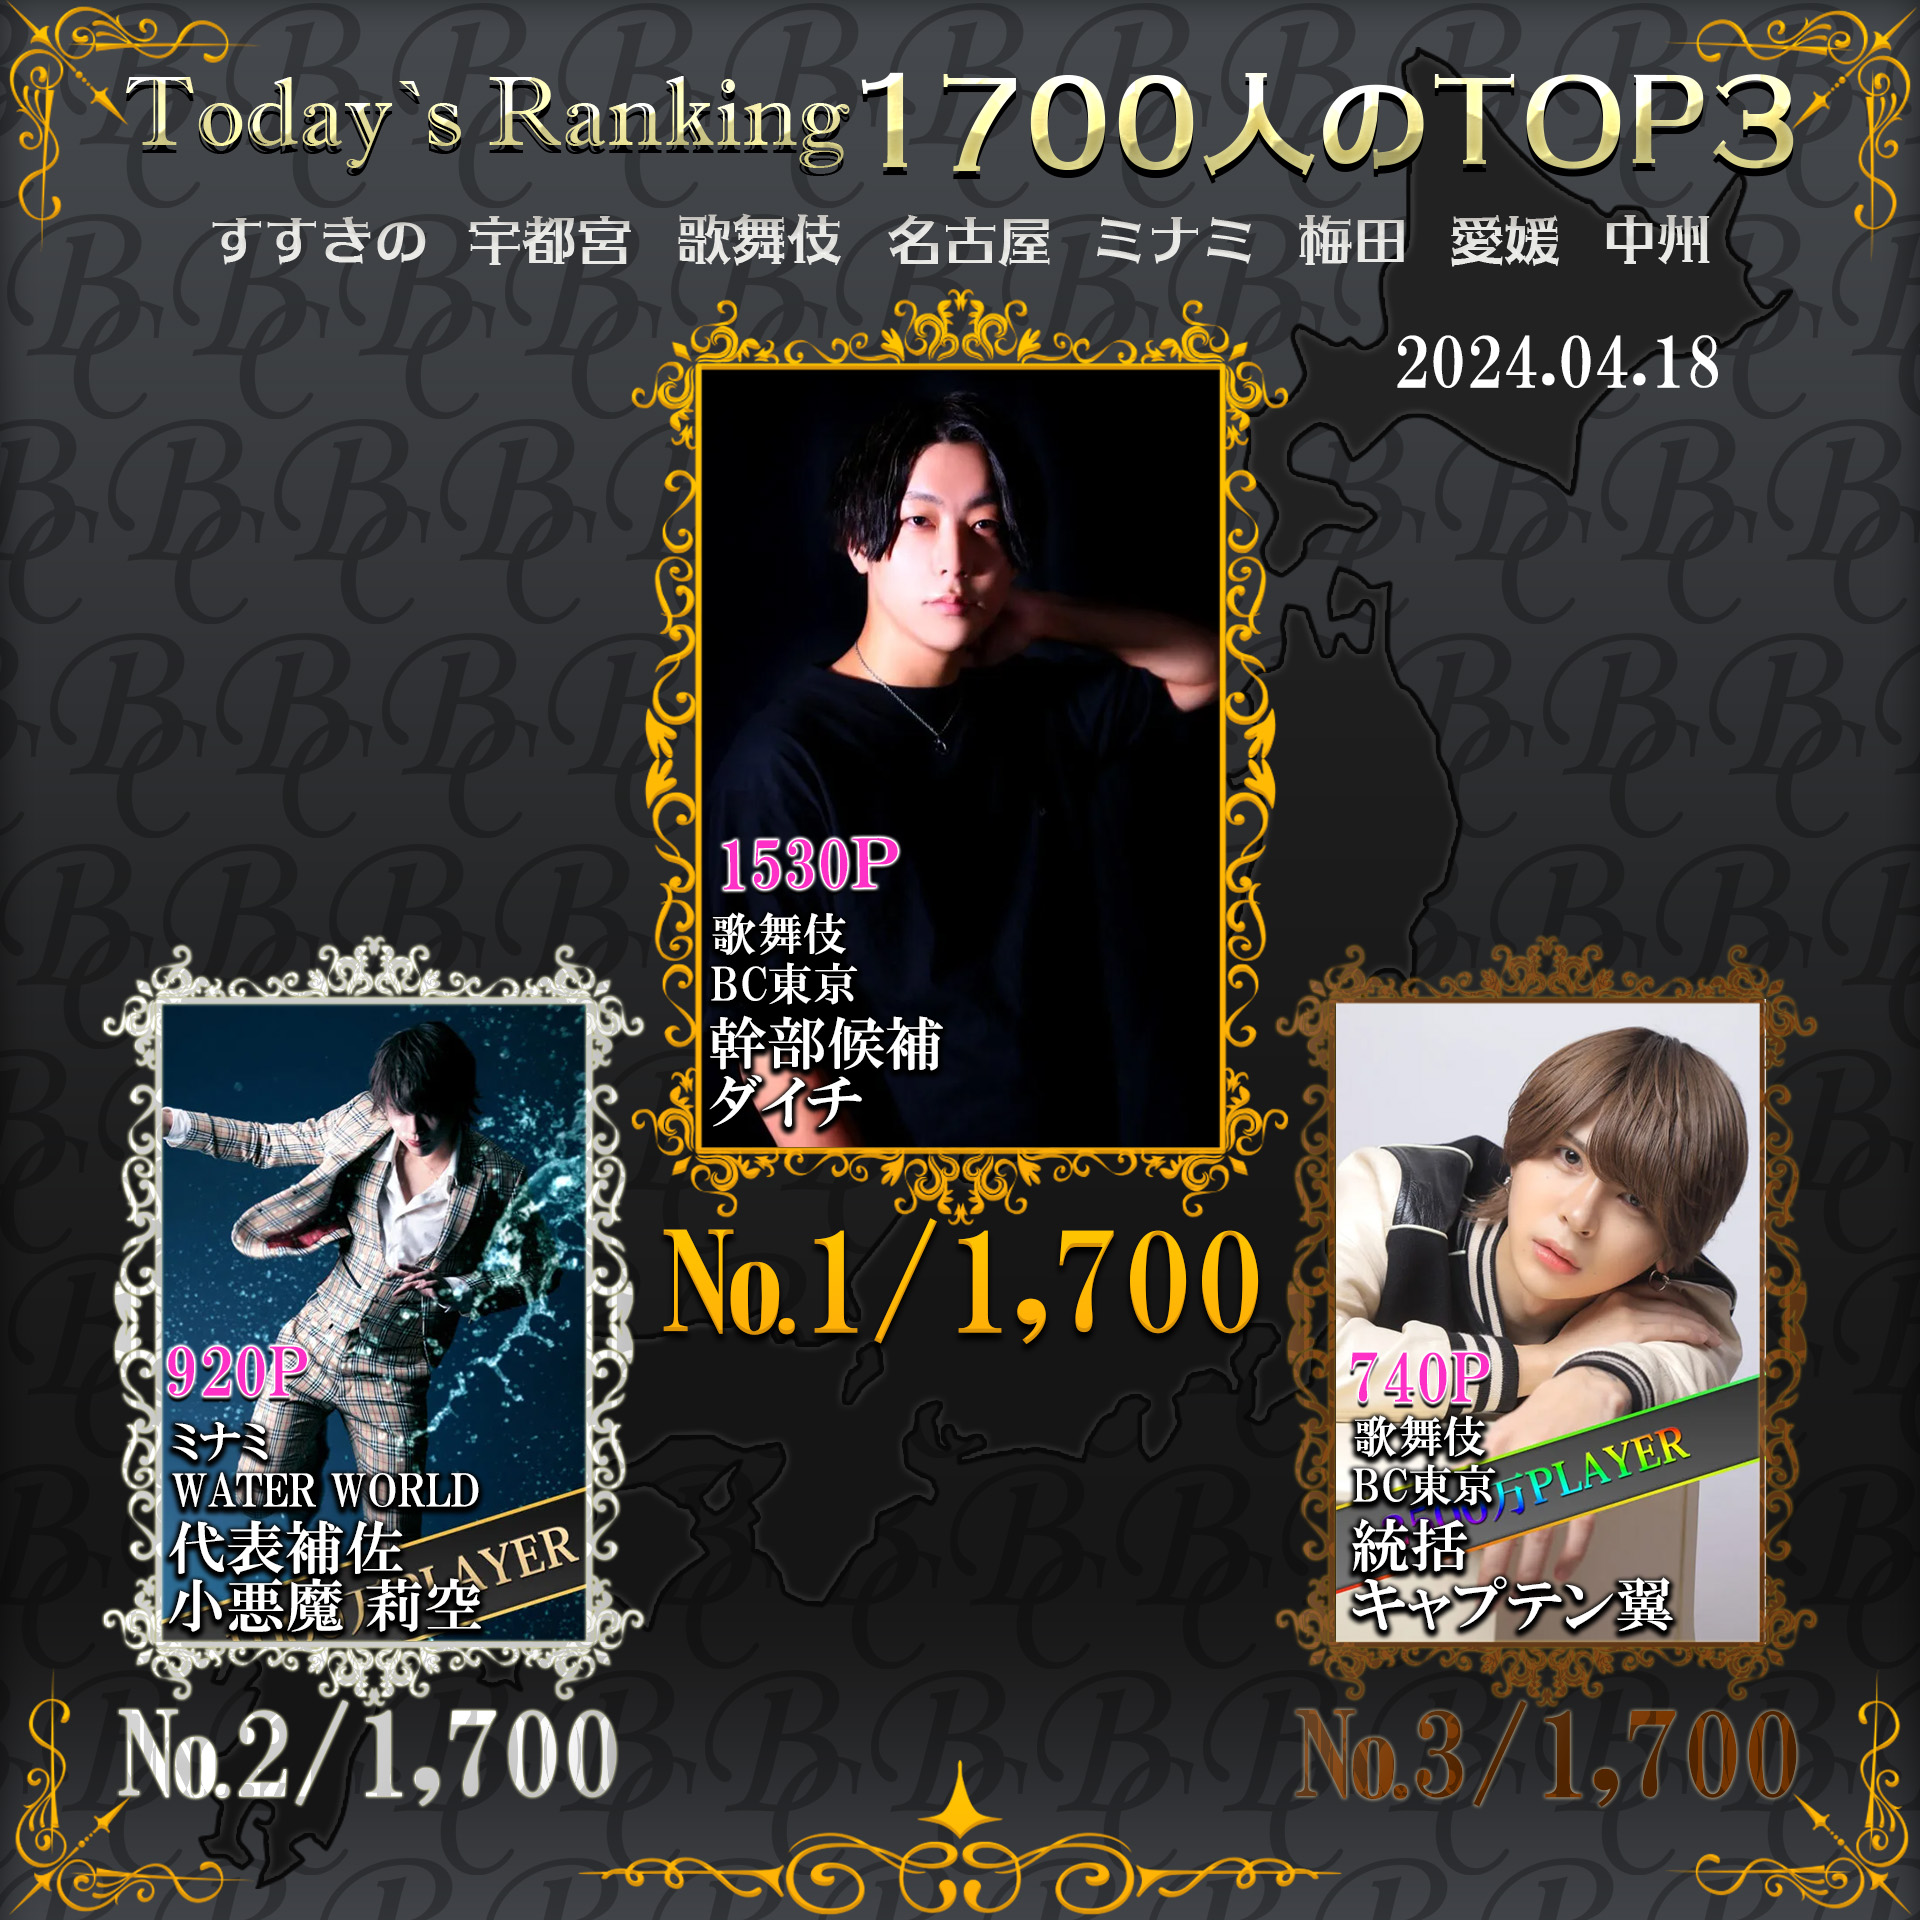 4/18 Today’s Ranking